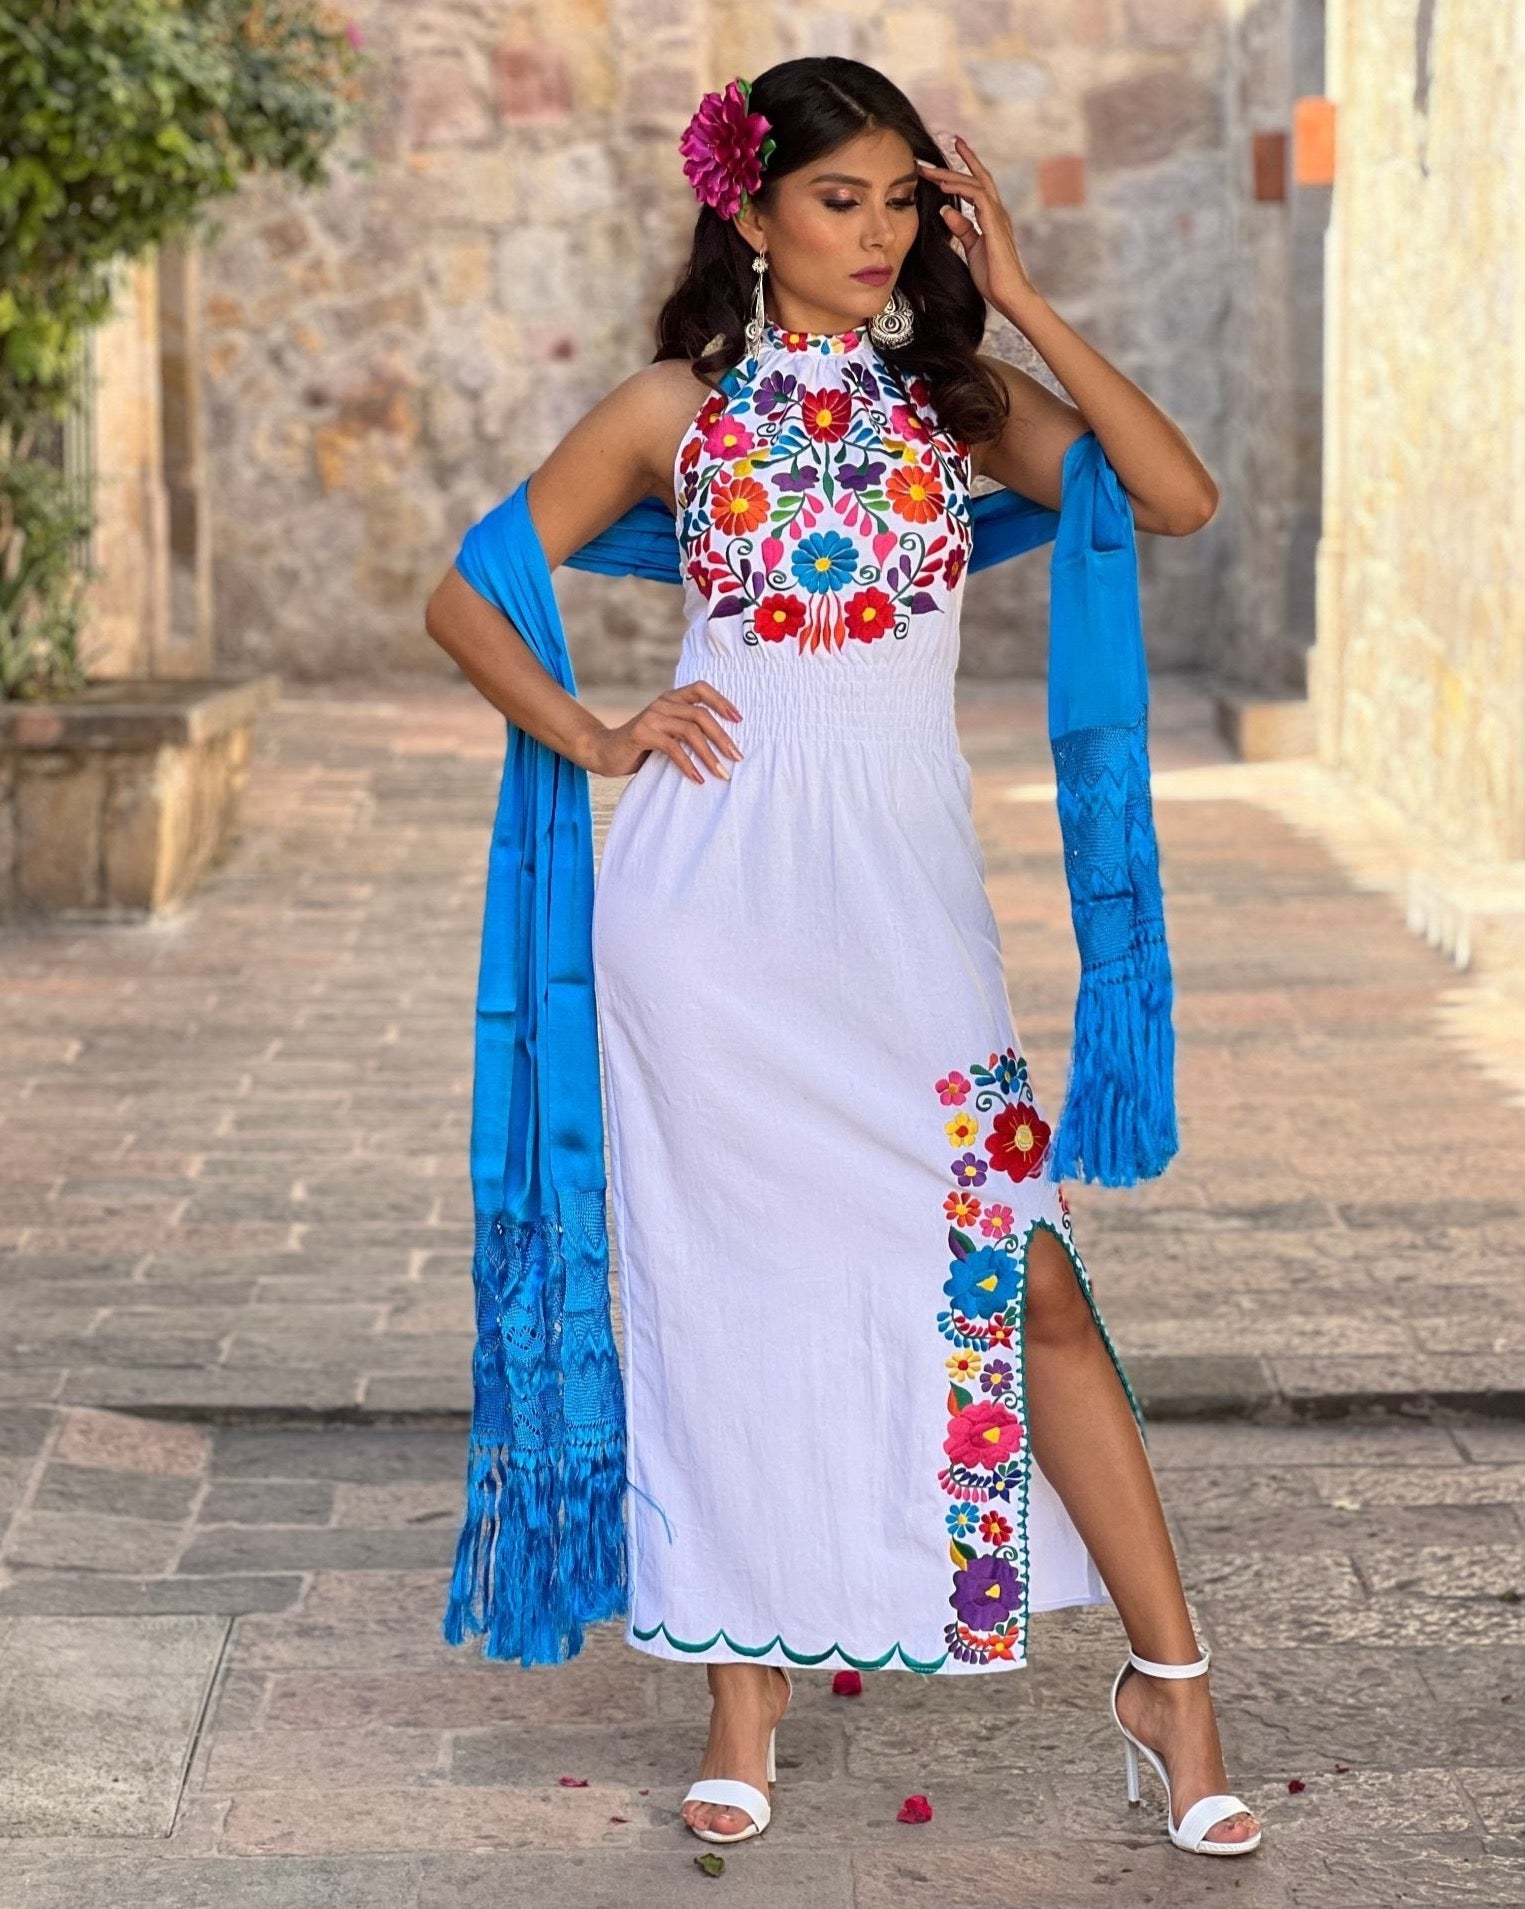 Embroidered Mexican Dress. Vestido Mexicano Bordado.custom-made